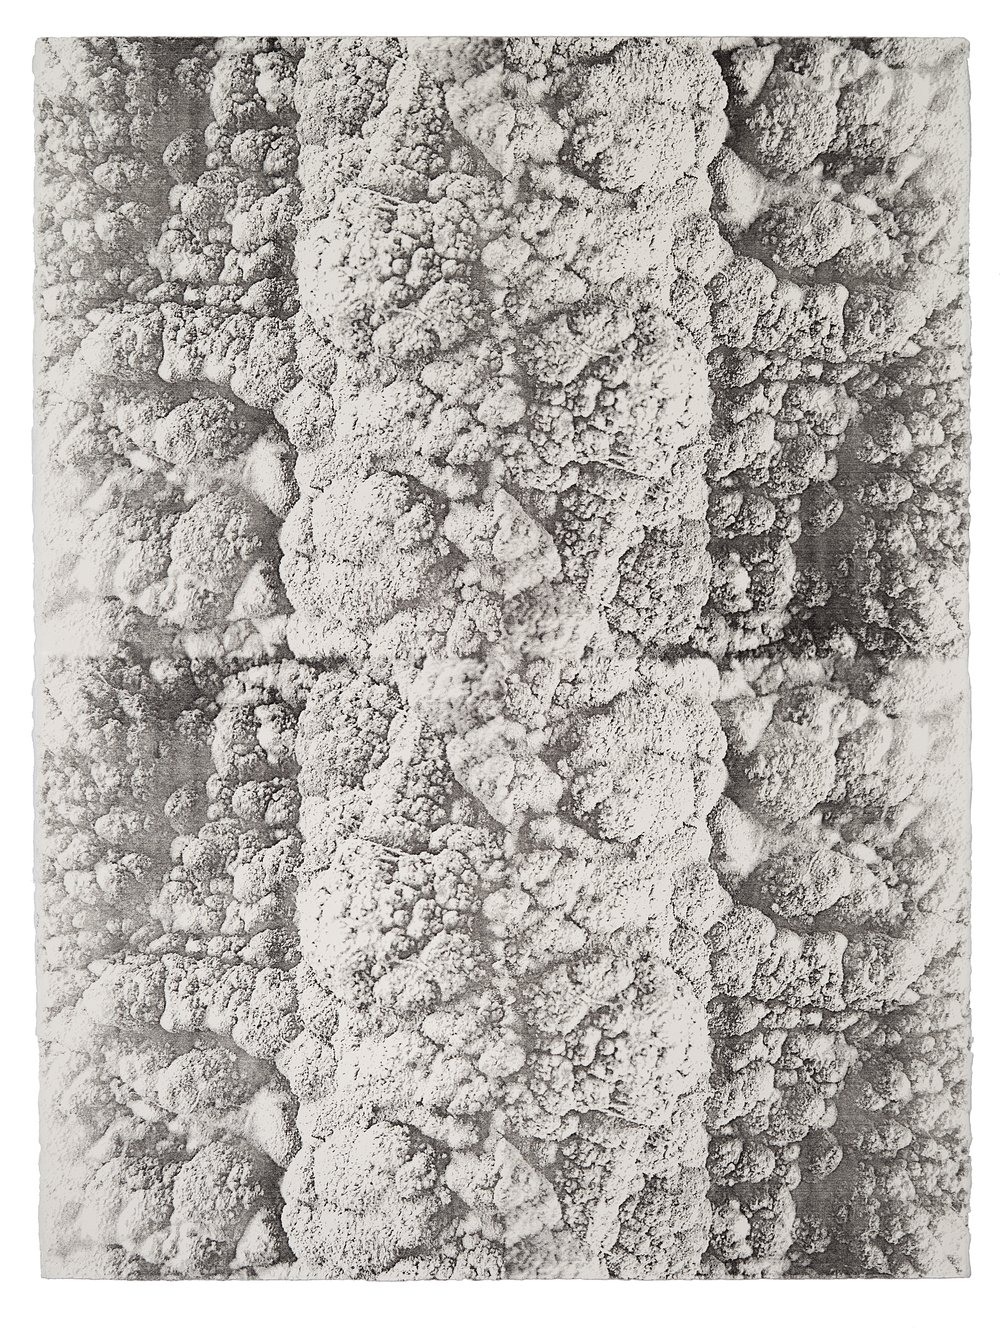 Svätopluk Mikyta: Antiorganic surface IV., 2017, aceton print, size: 76,5 x 57,5